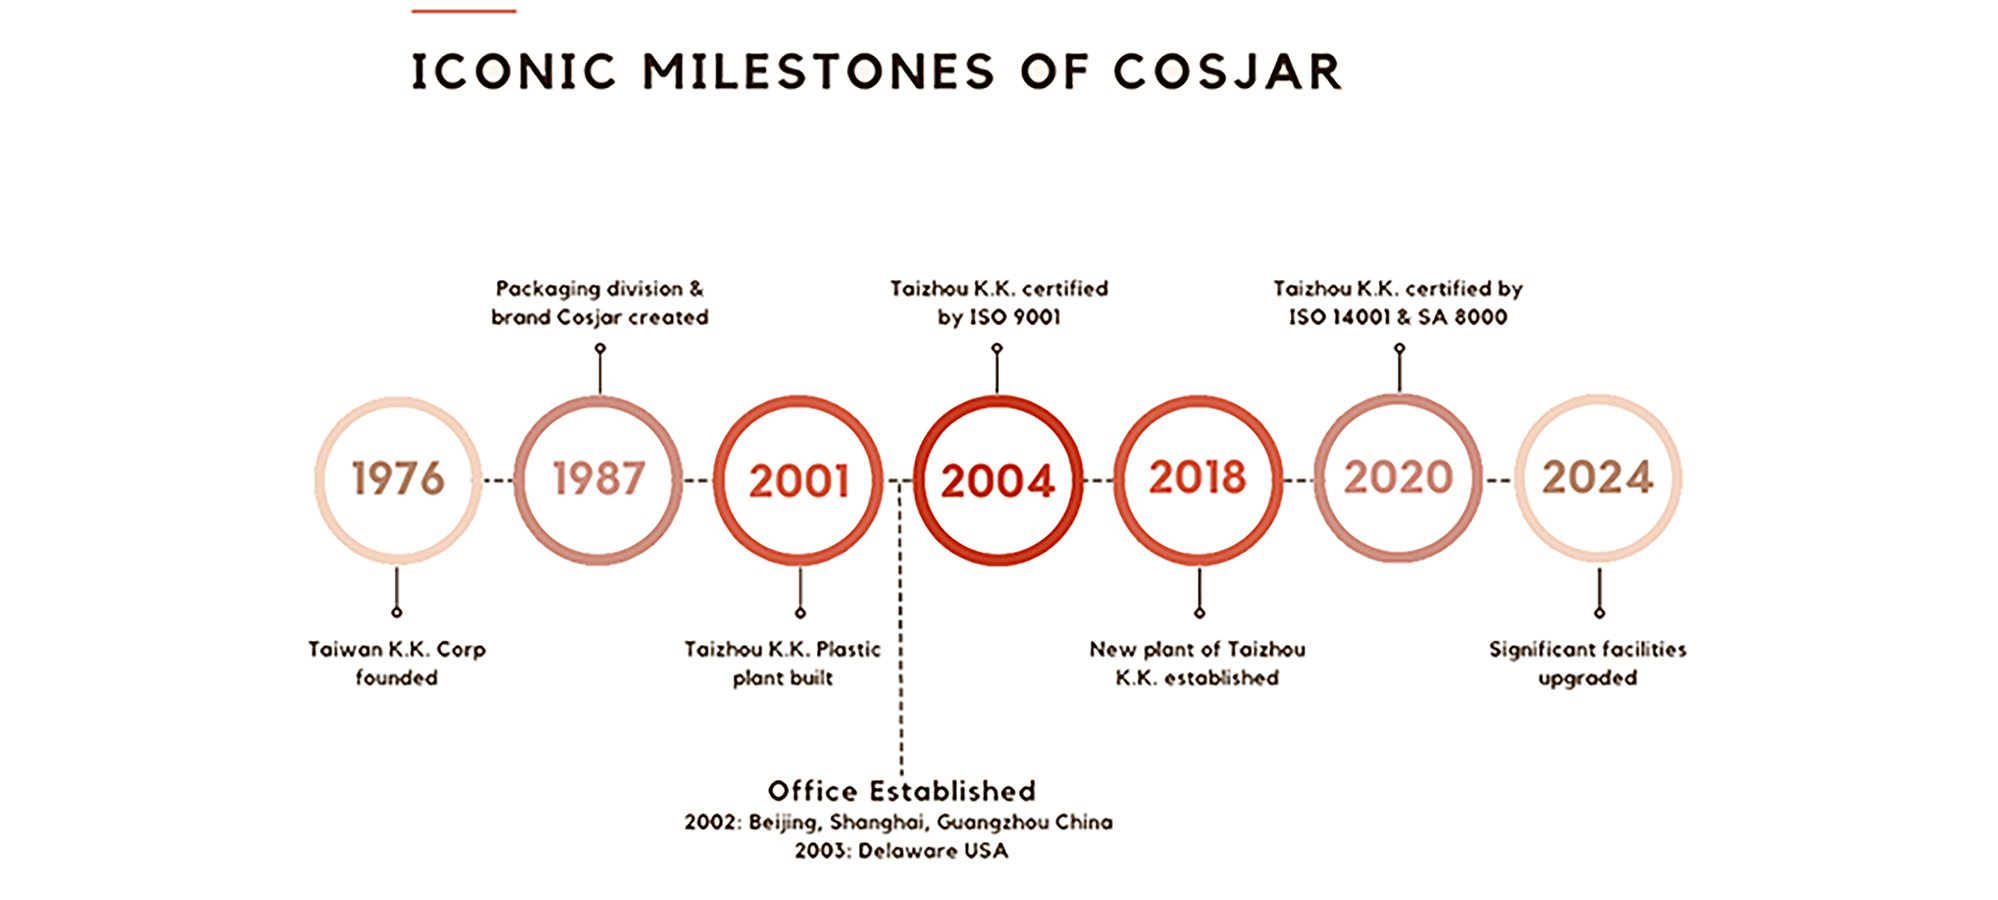 History - COSJAR Milestone